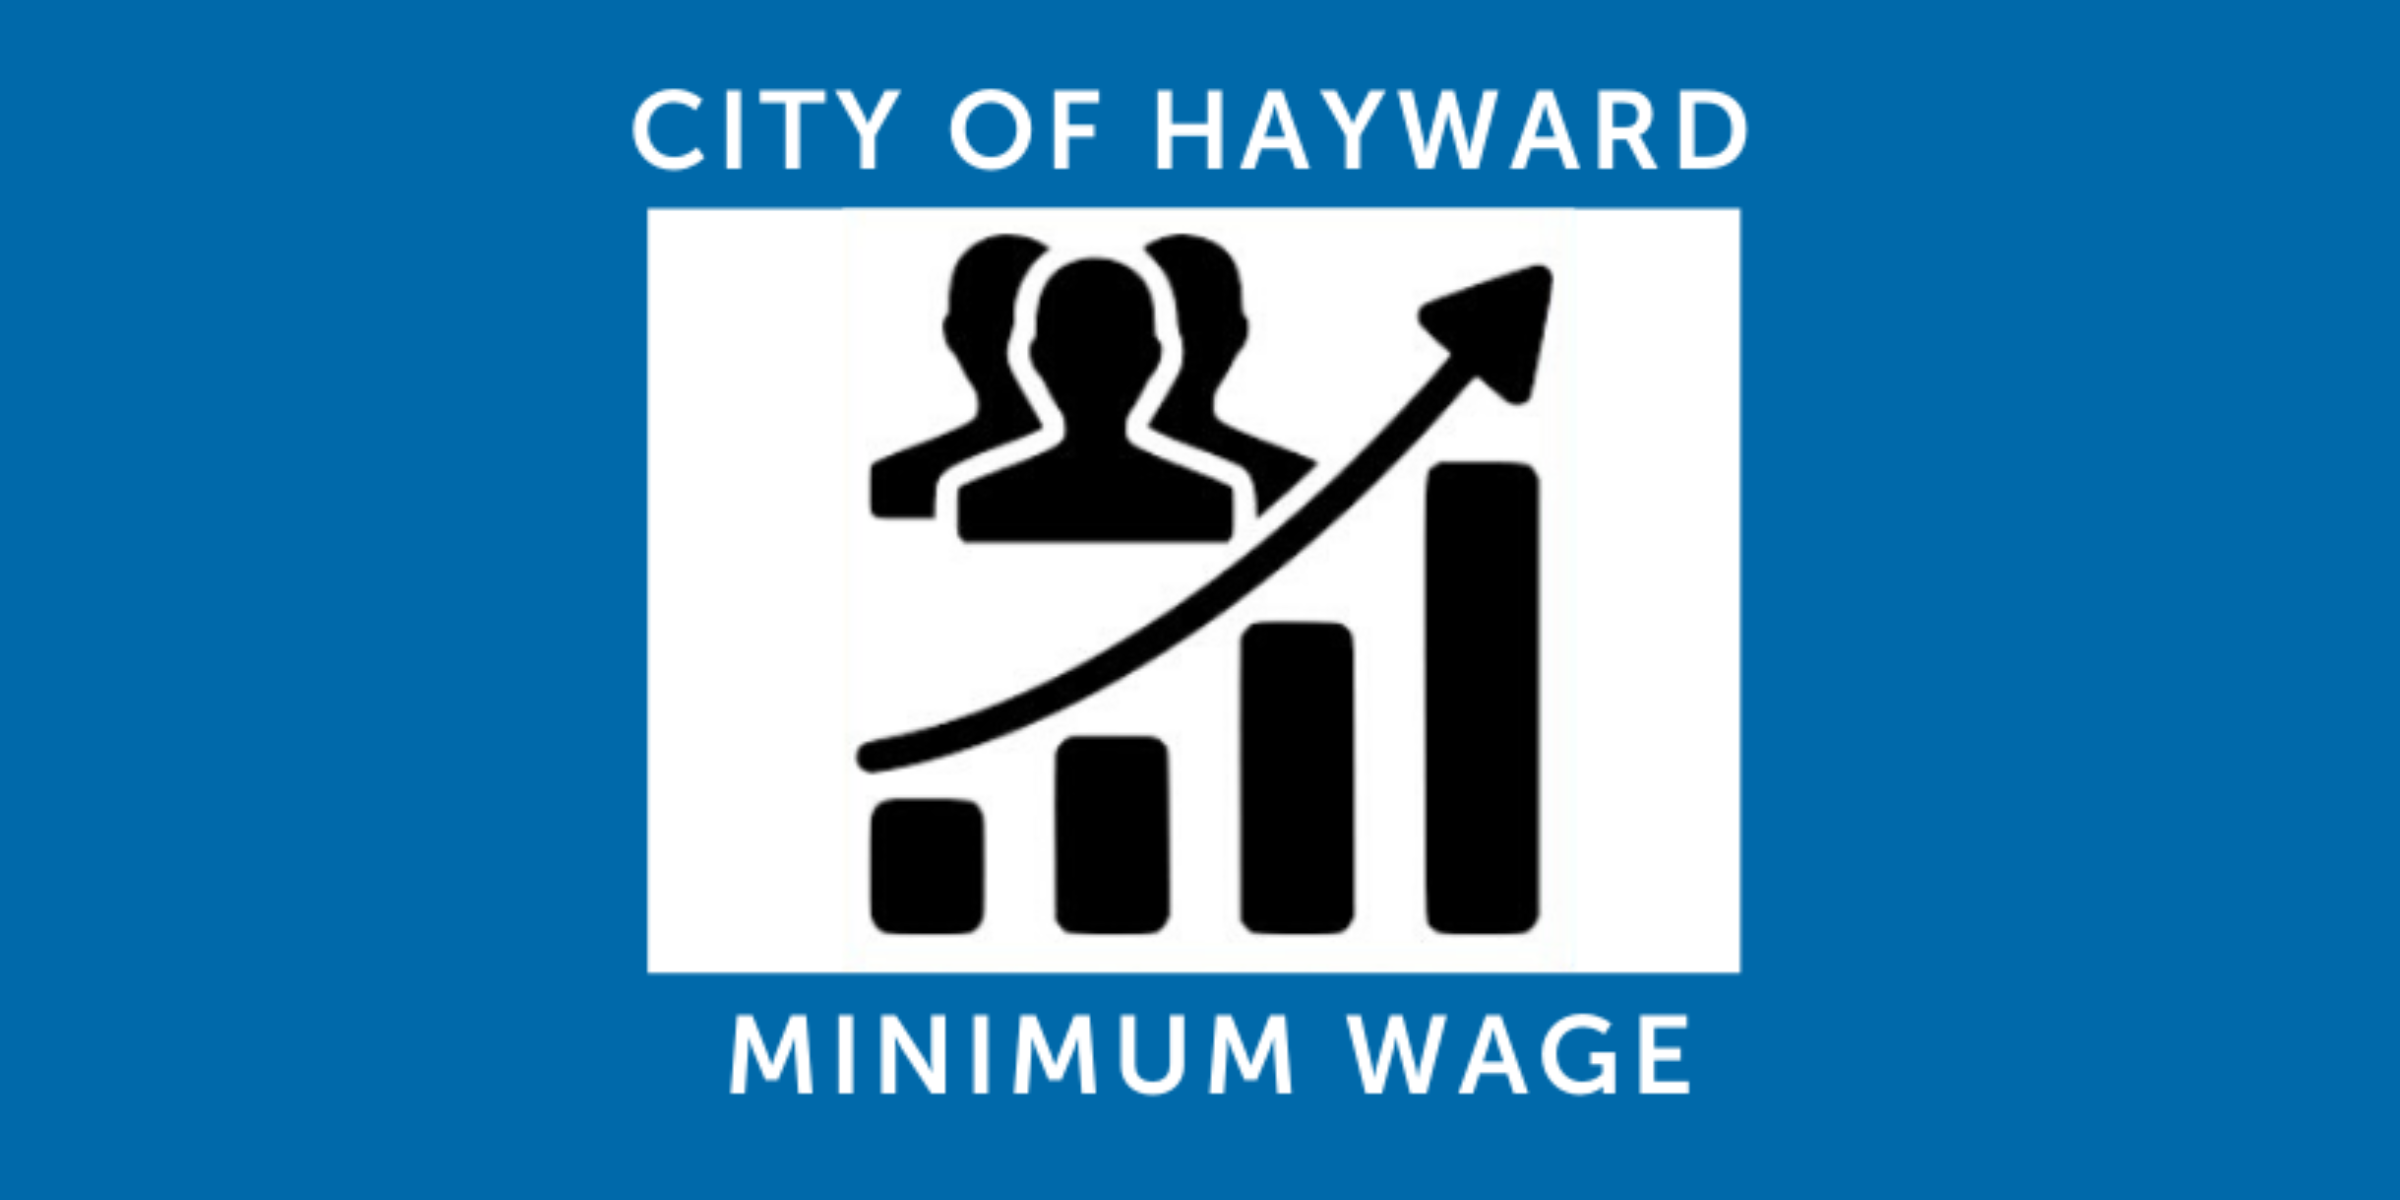 Hayward Minimum Wage logo on a blue background